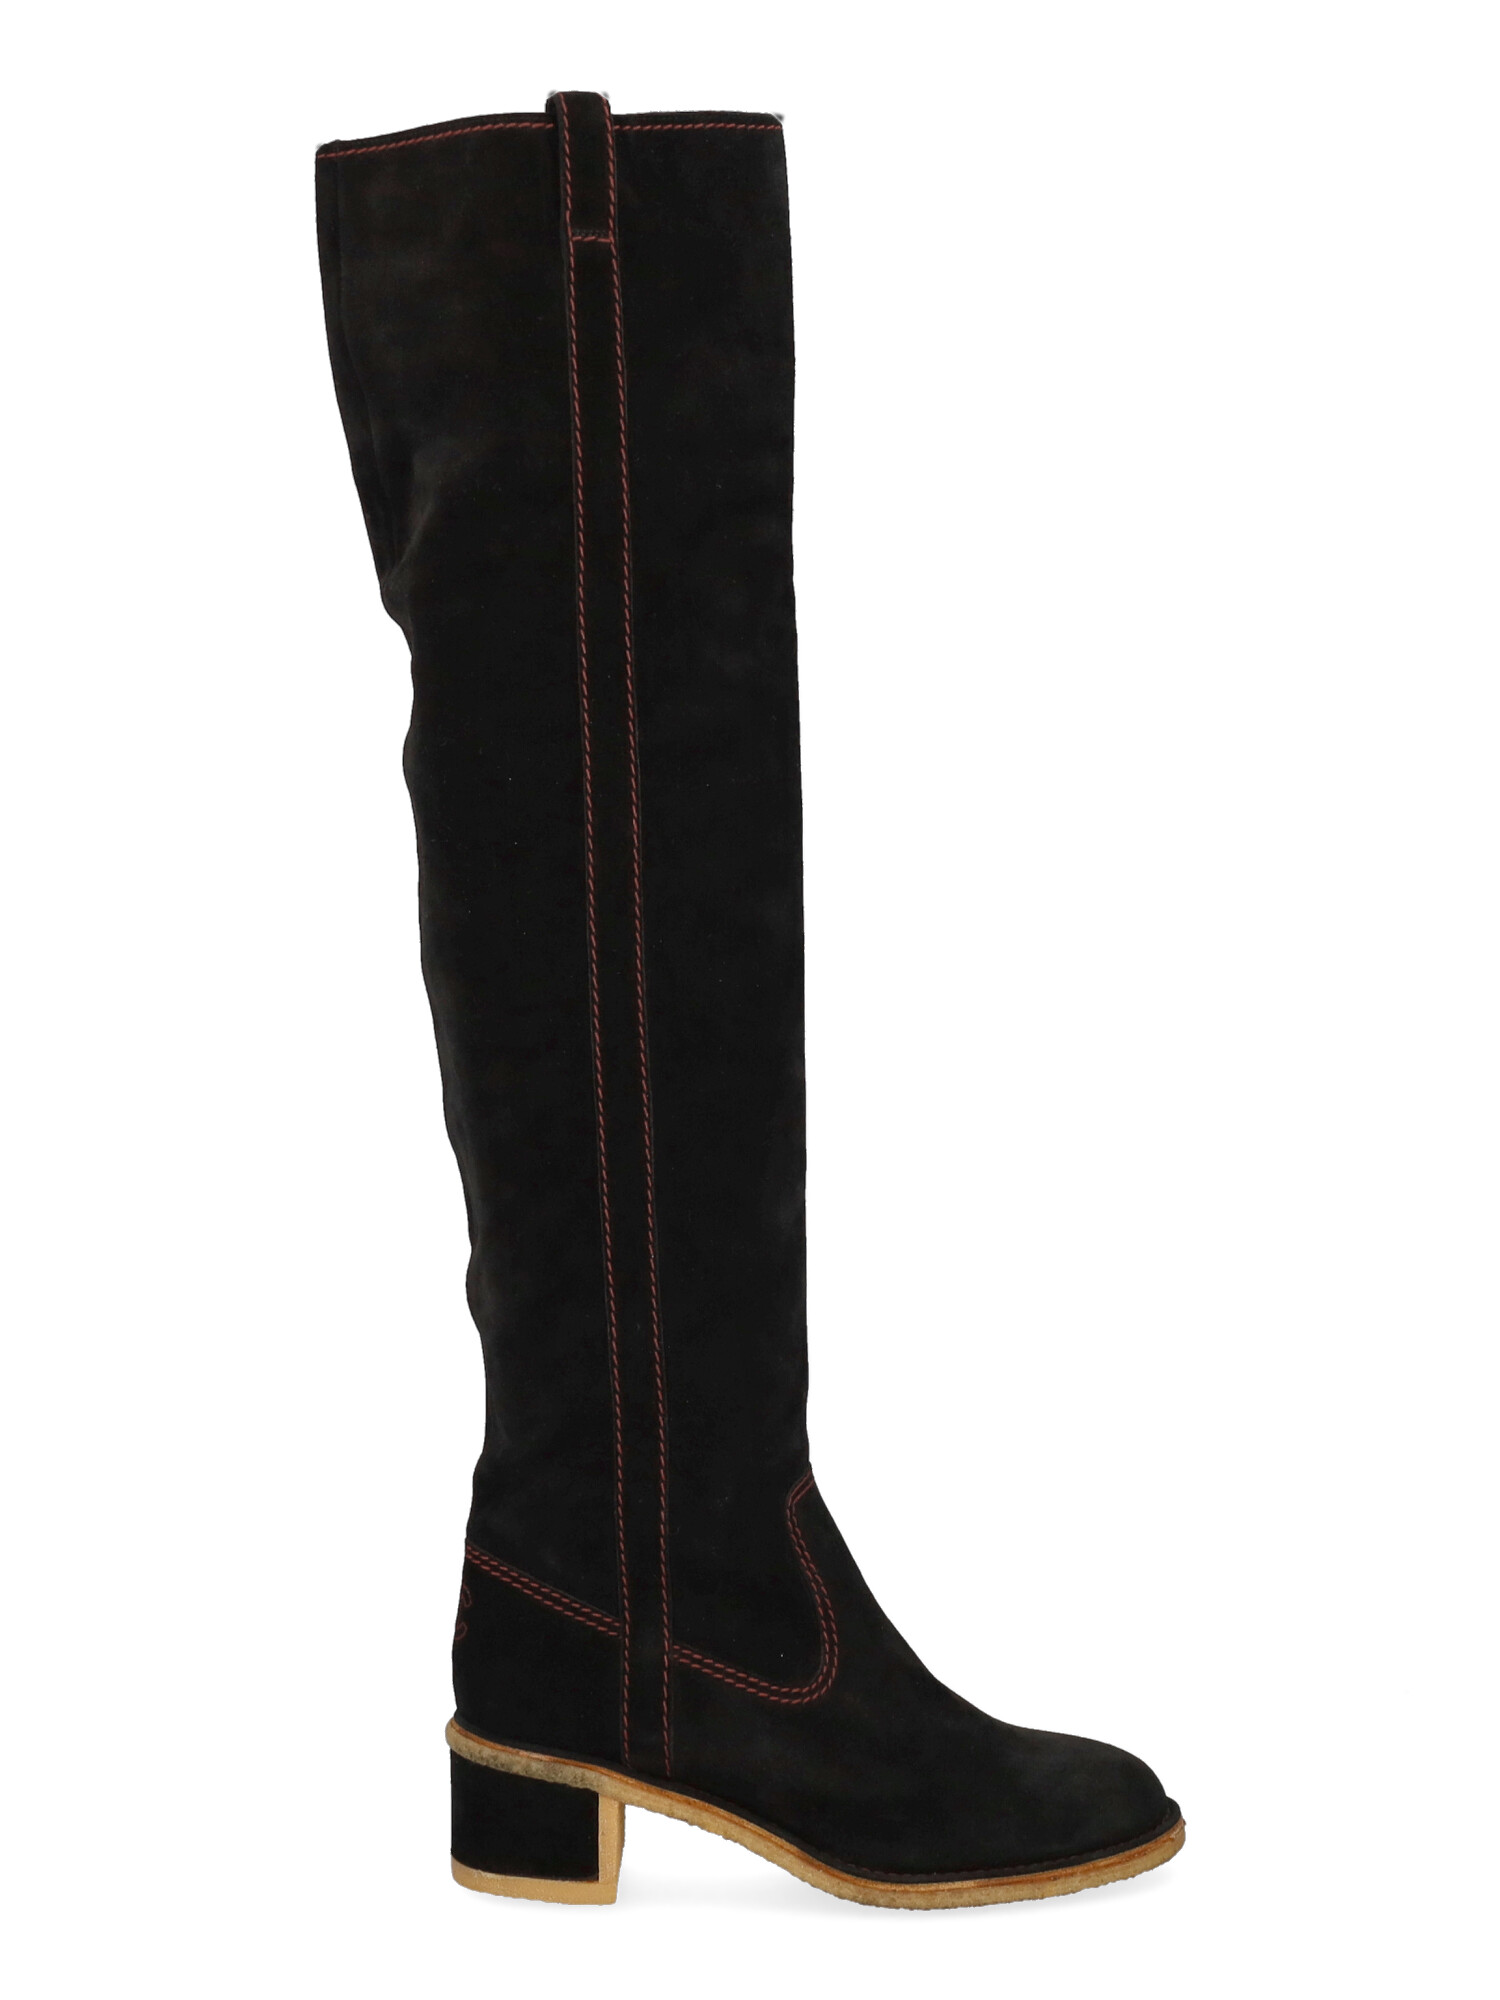 Chanel High Boots G39614 X56793 94305 , Black, 39